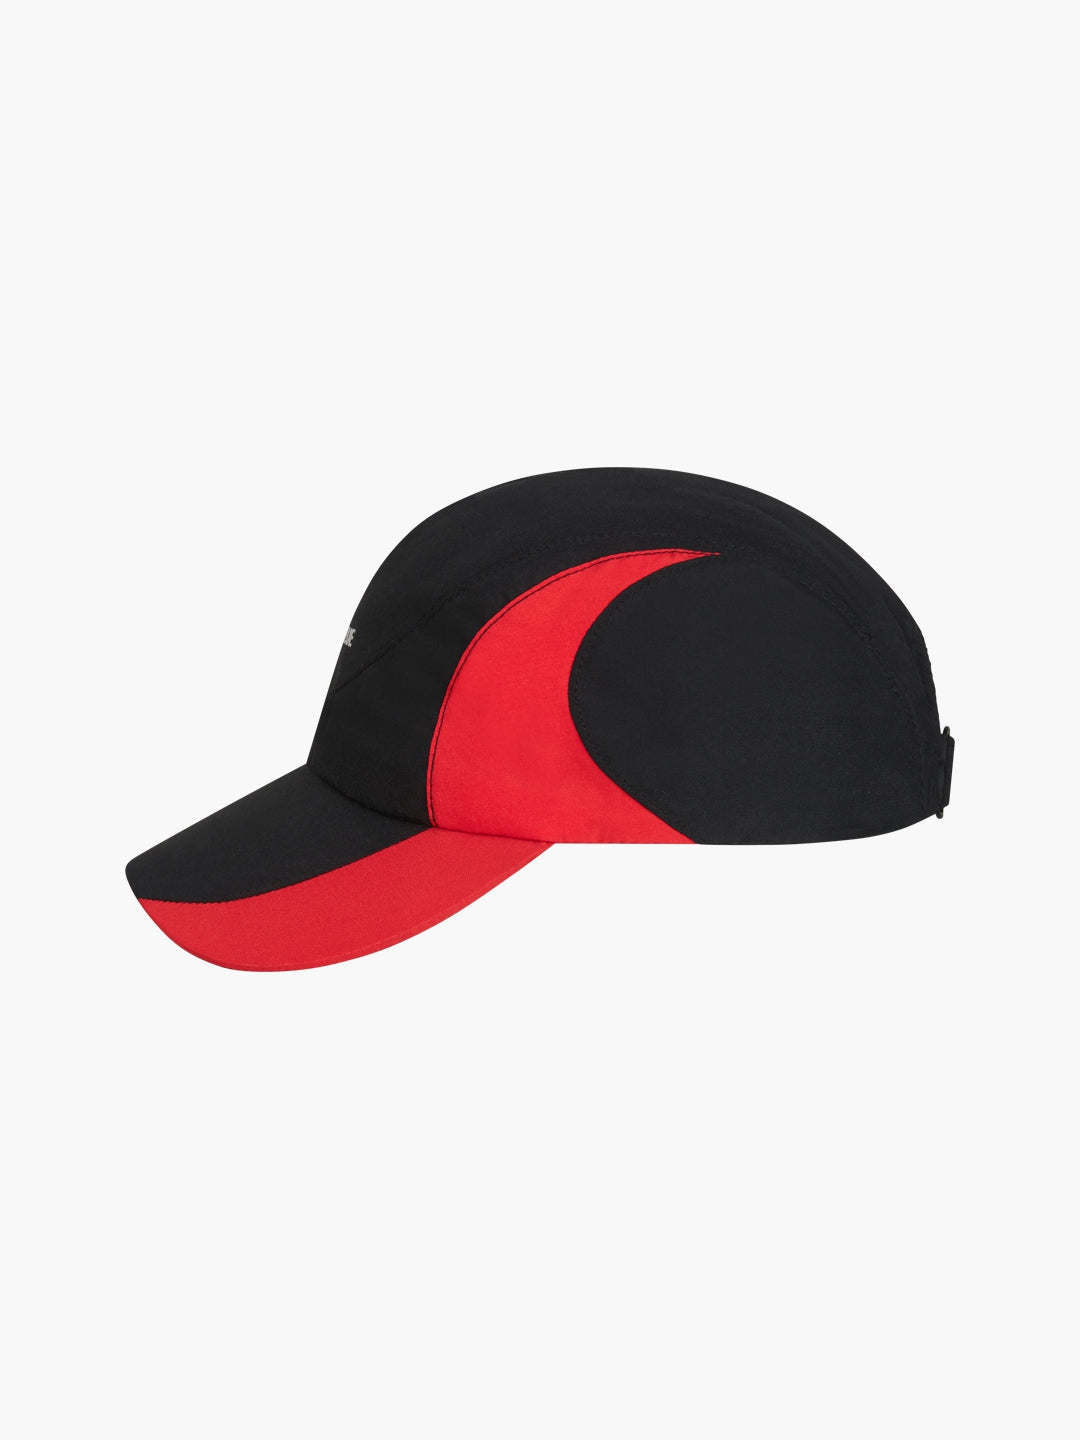 BANLIEUE + KFC PERFORMANCE CAP | BLACK / RED